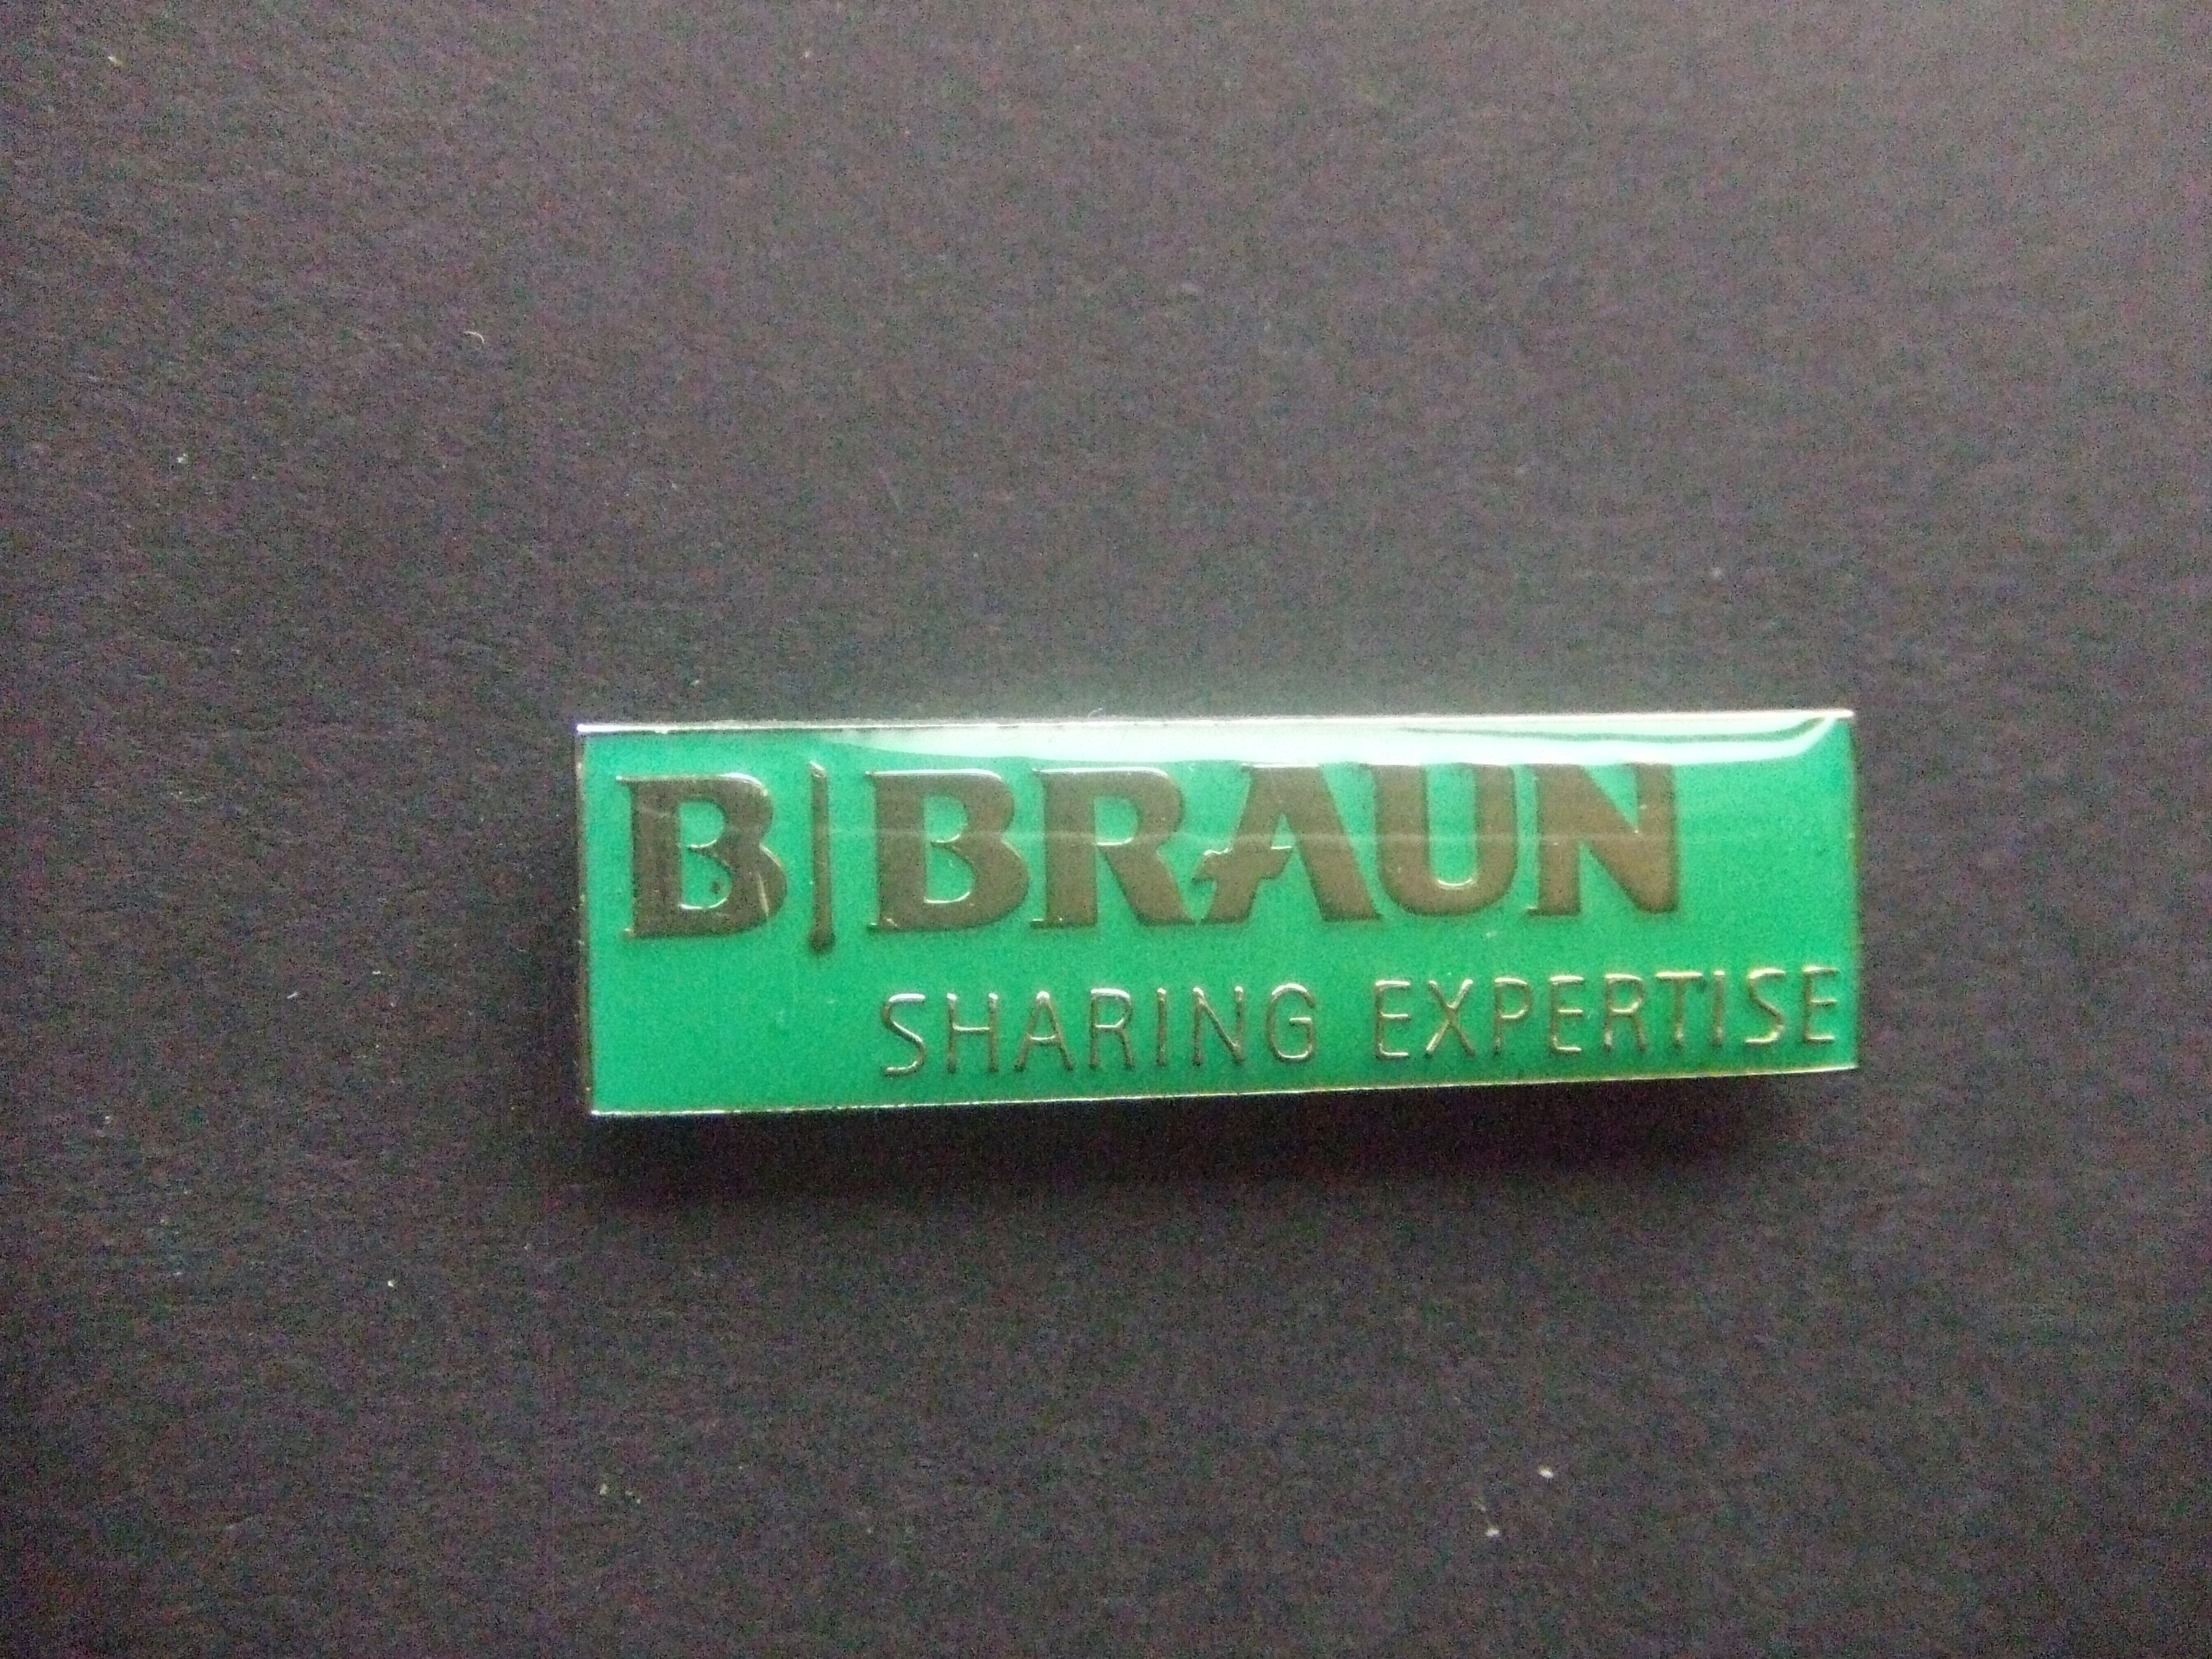 Braun sharing Expertise gezondheid bedrijven